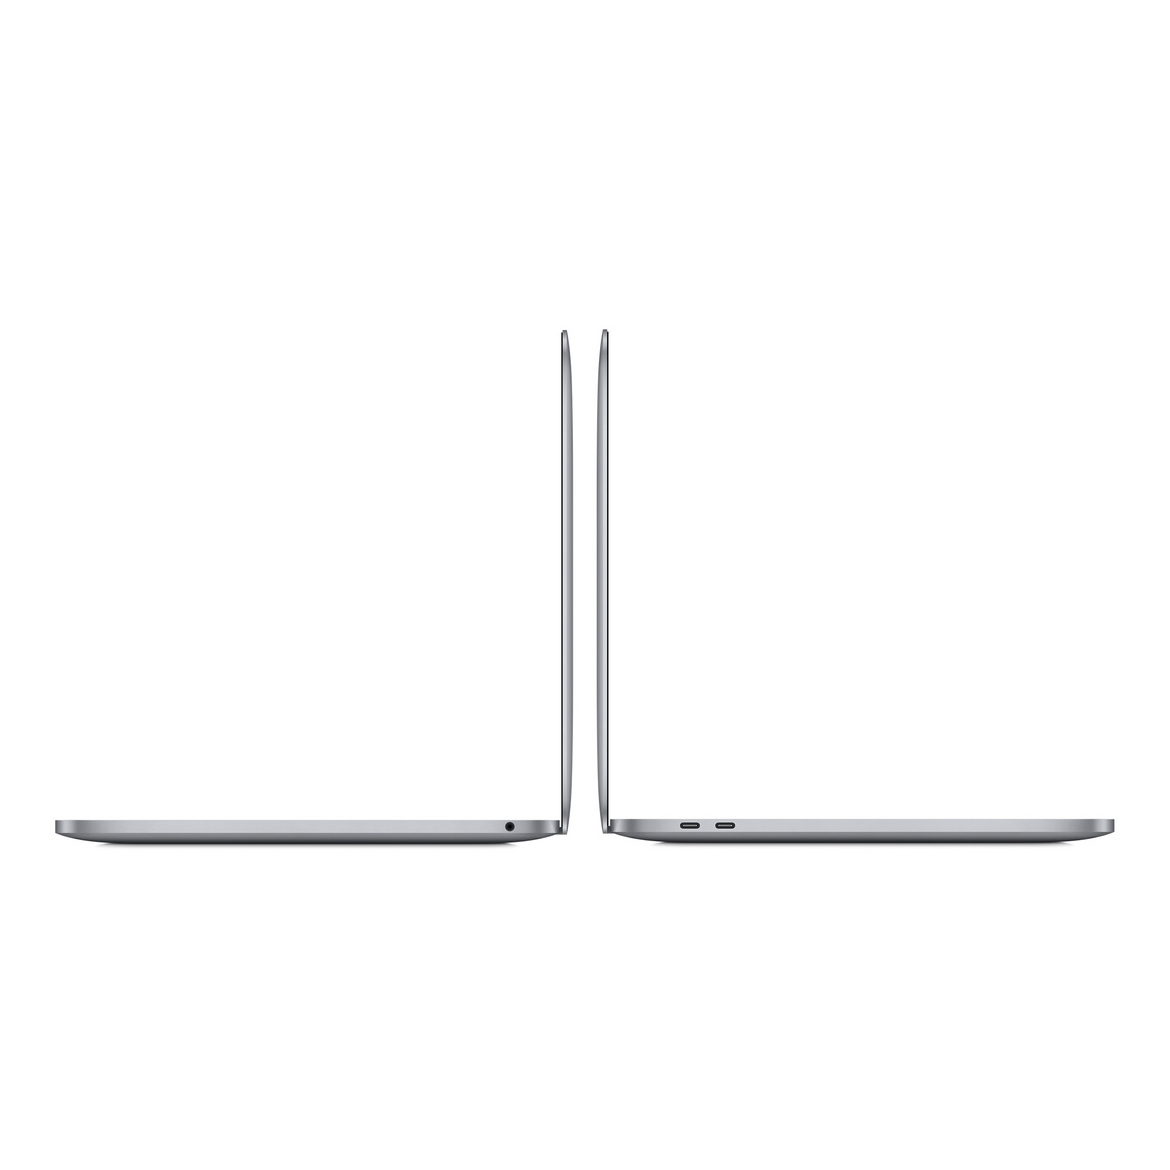 MacBook Pro 13.3-inch Laptop 2.0GHz 16GB RAM 512GB SSD - Space Gray (2020)